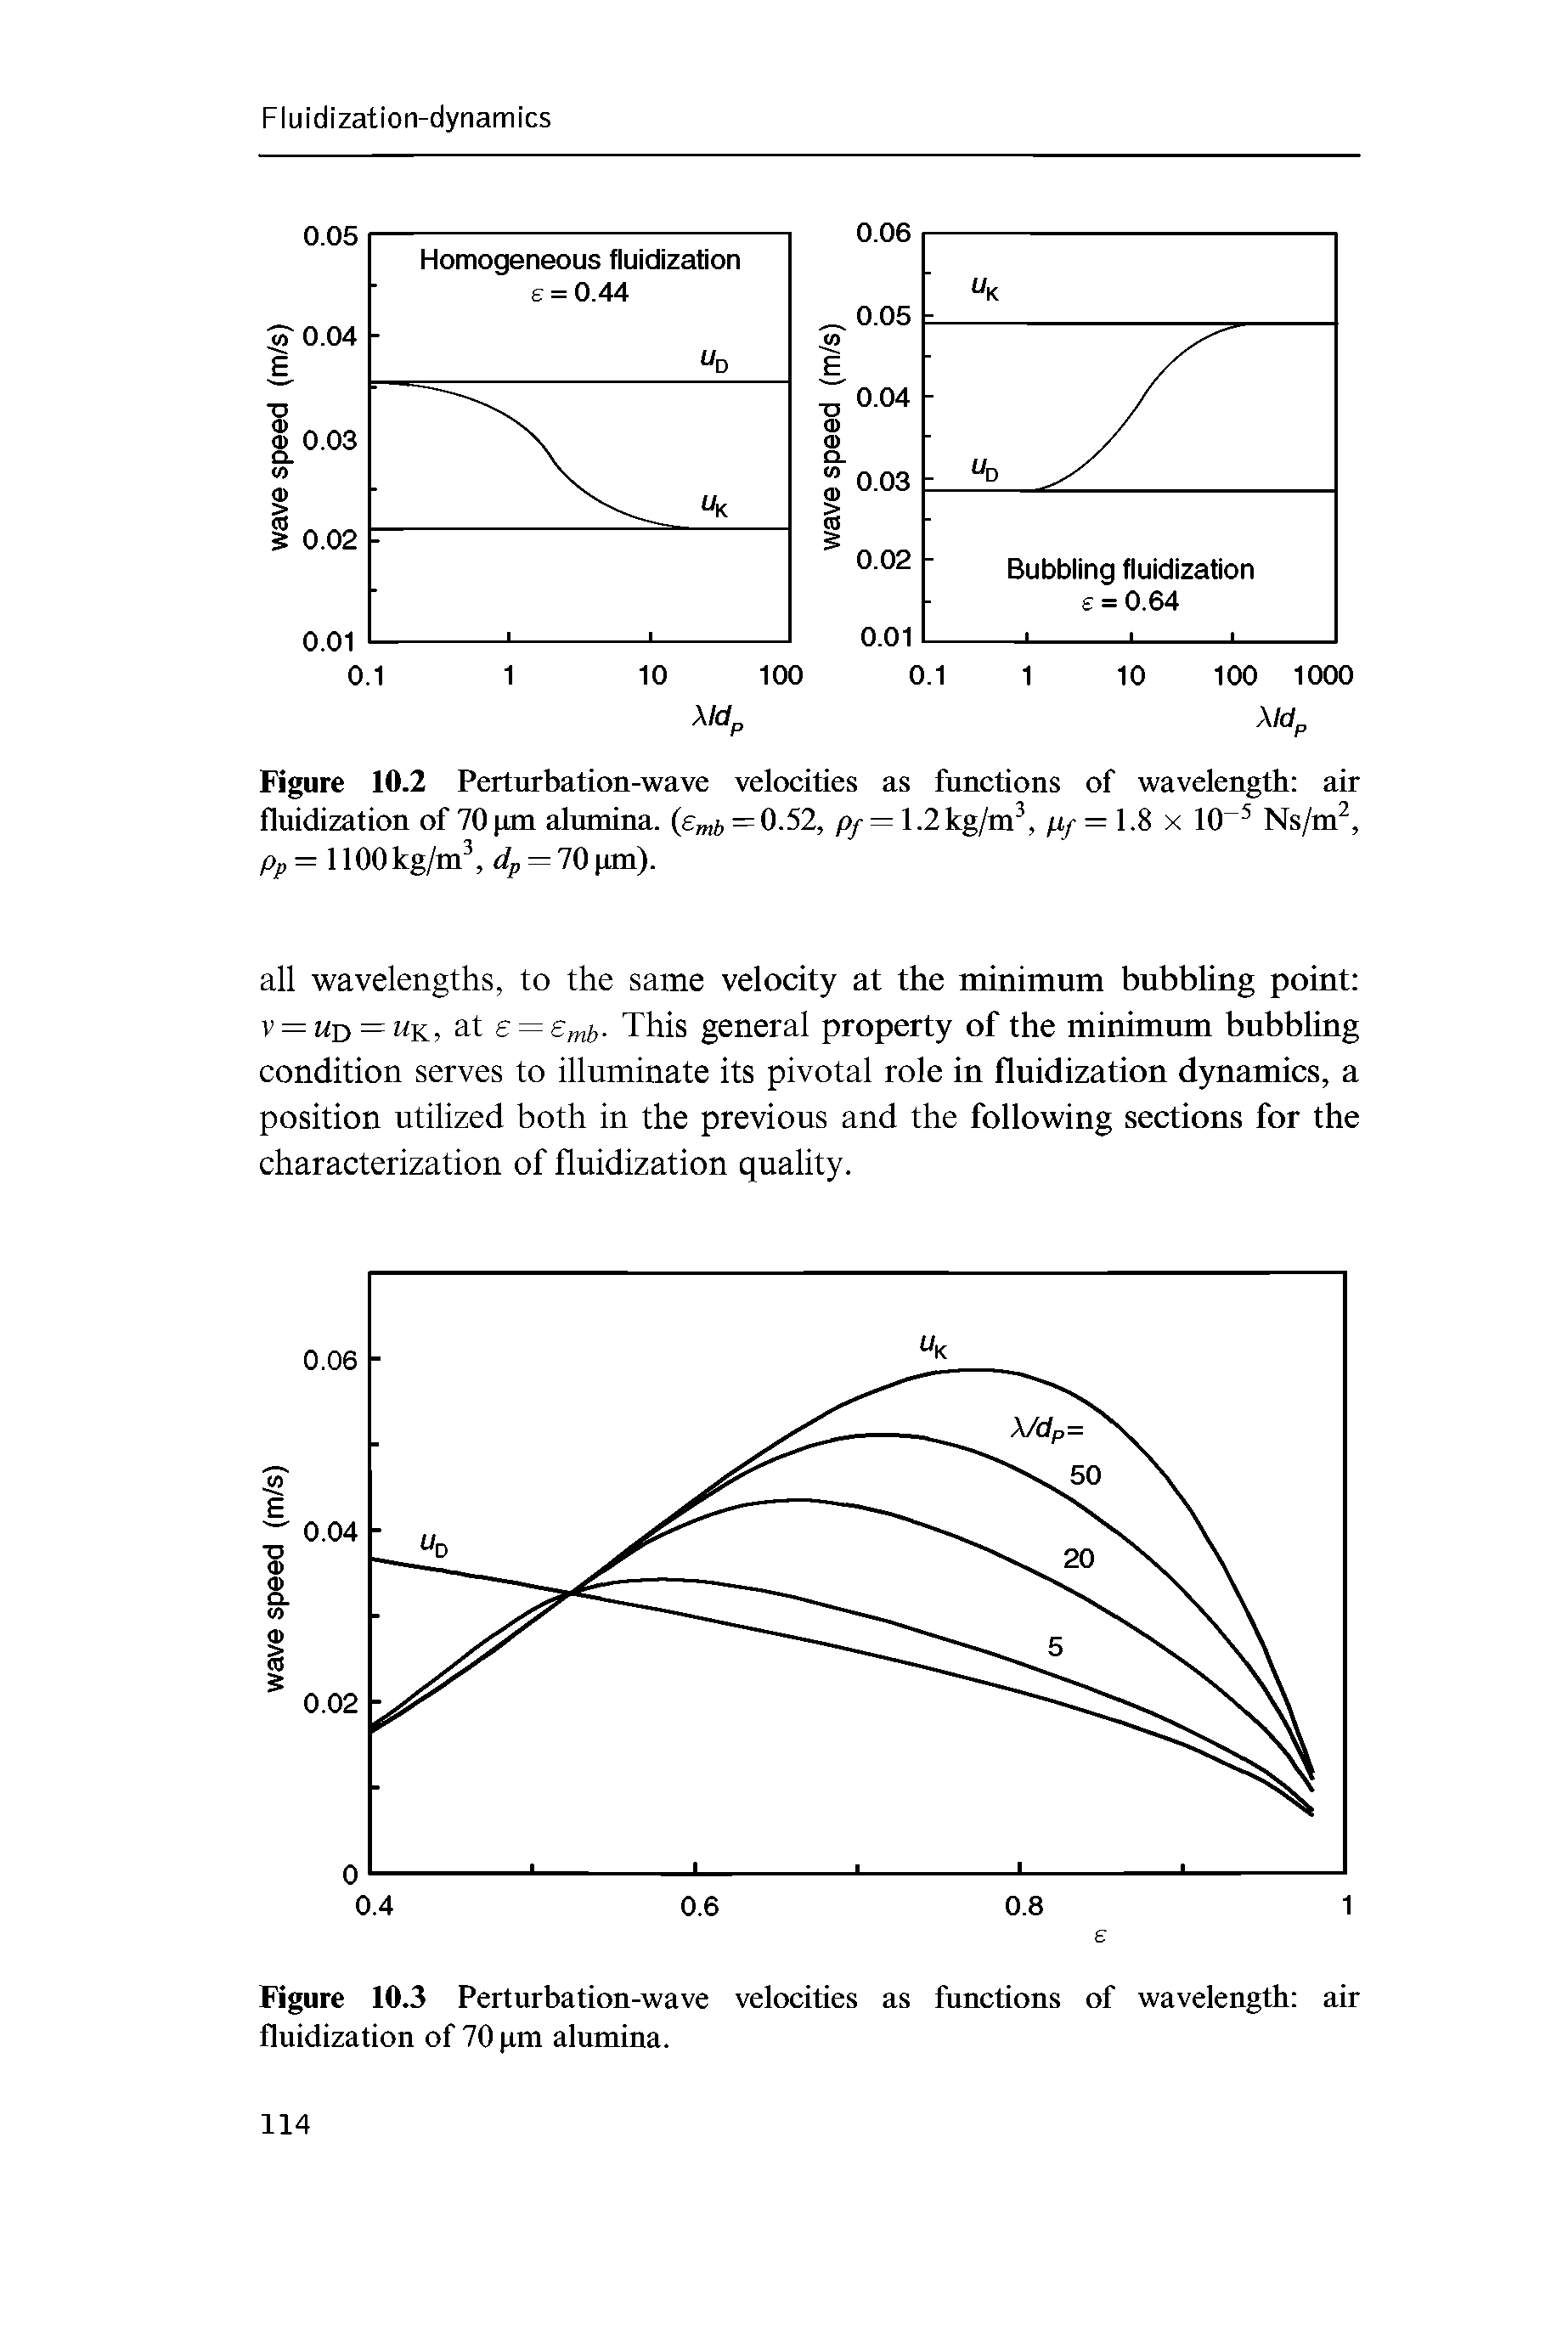 Figure 10.3 Perturbation-wave velocities as functions of wavelength air fluidization of 70 gm alumina.